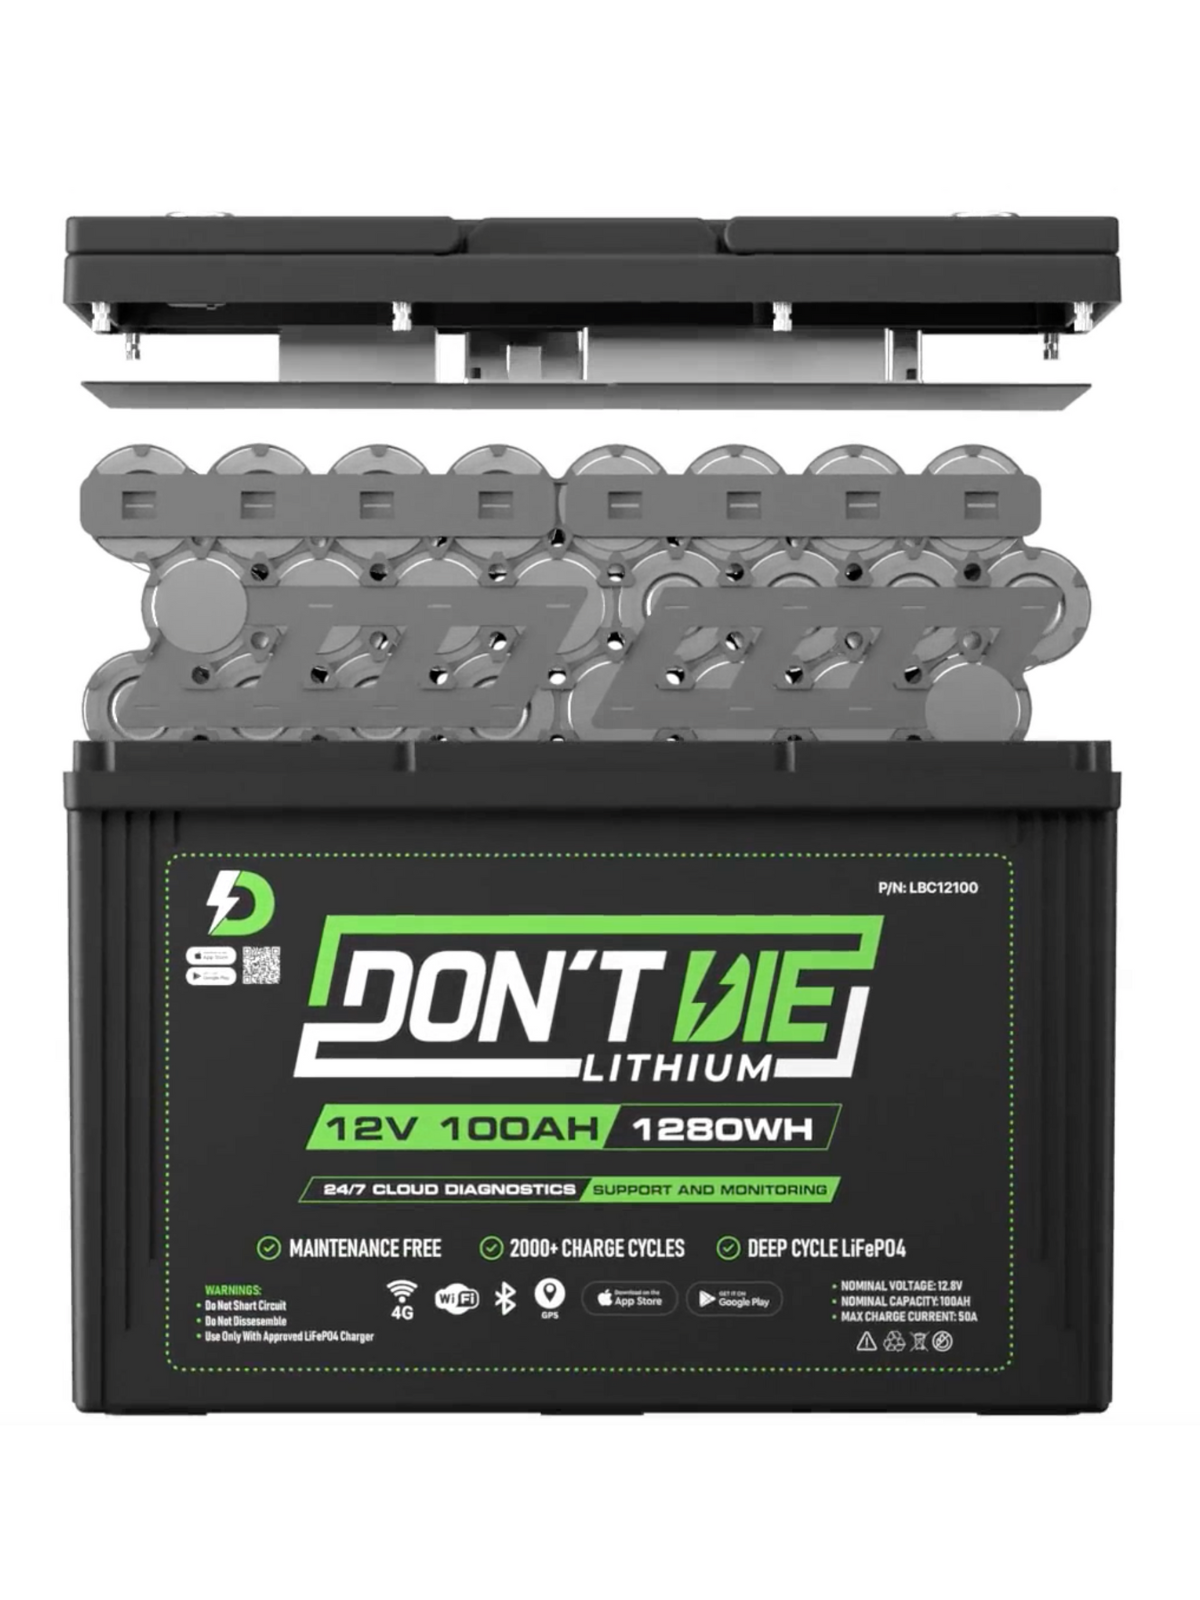 LiTime 12V 100Ah Trolling Motor Lithium Battery: Safe, Reliable